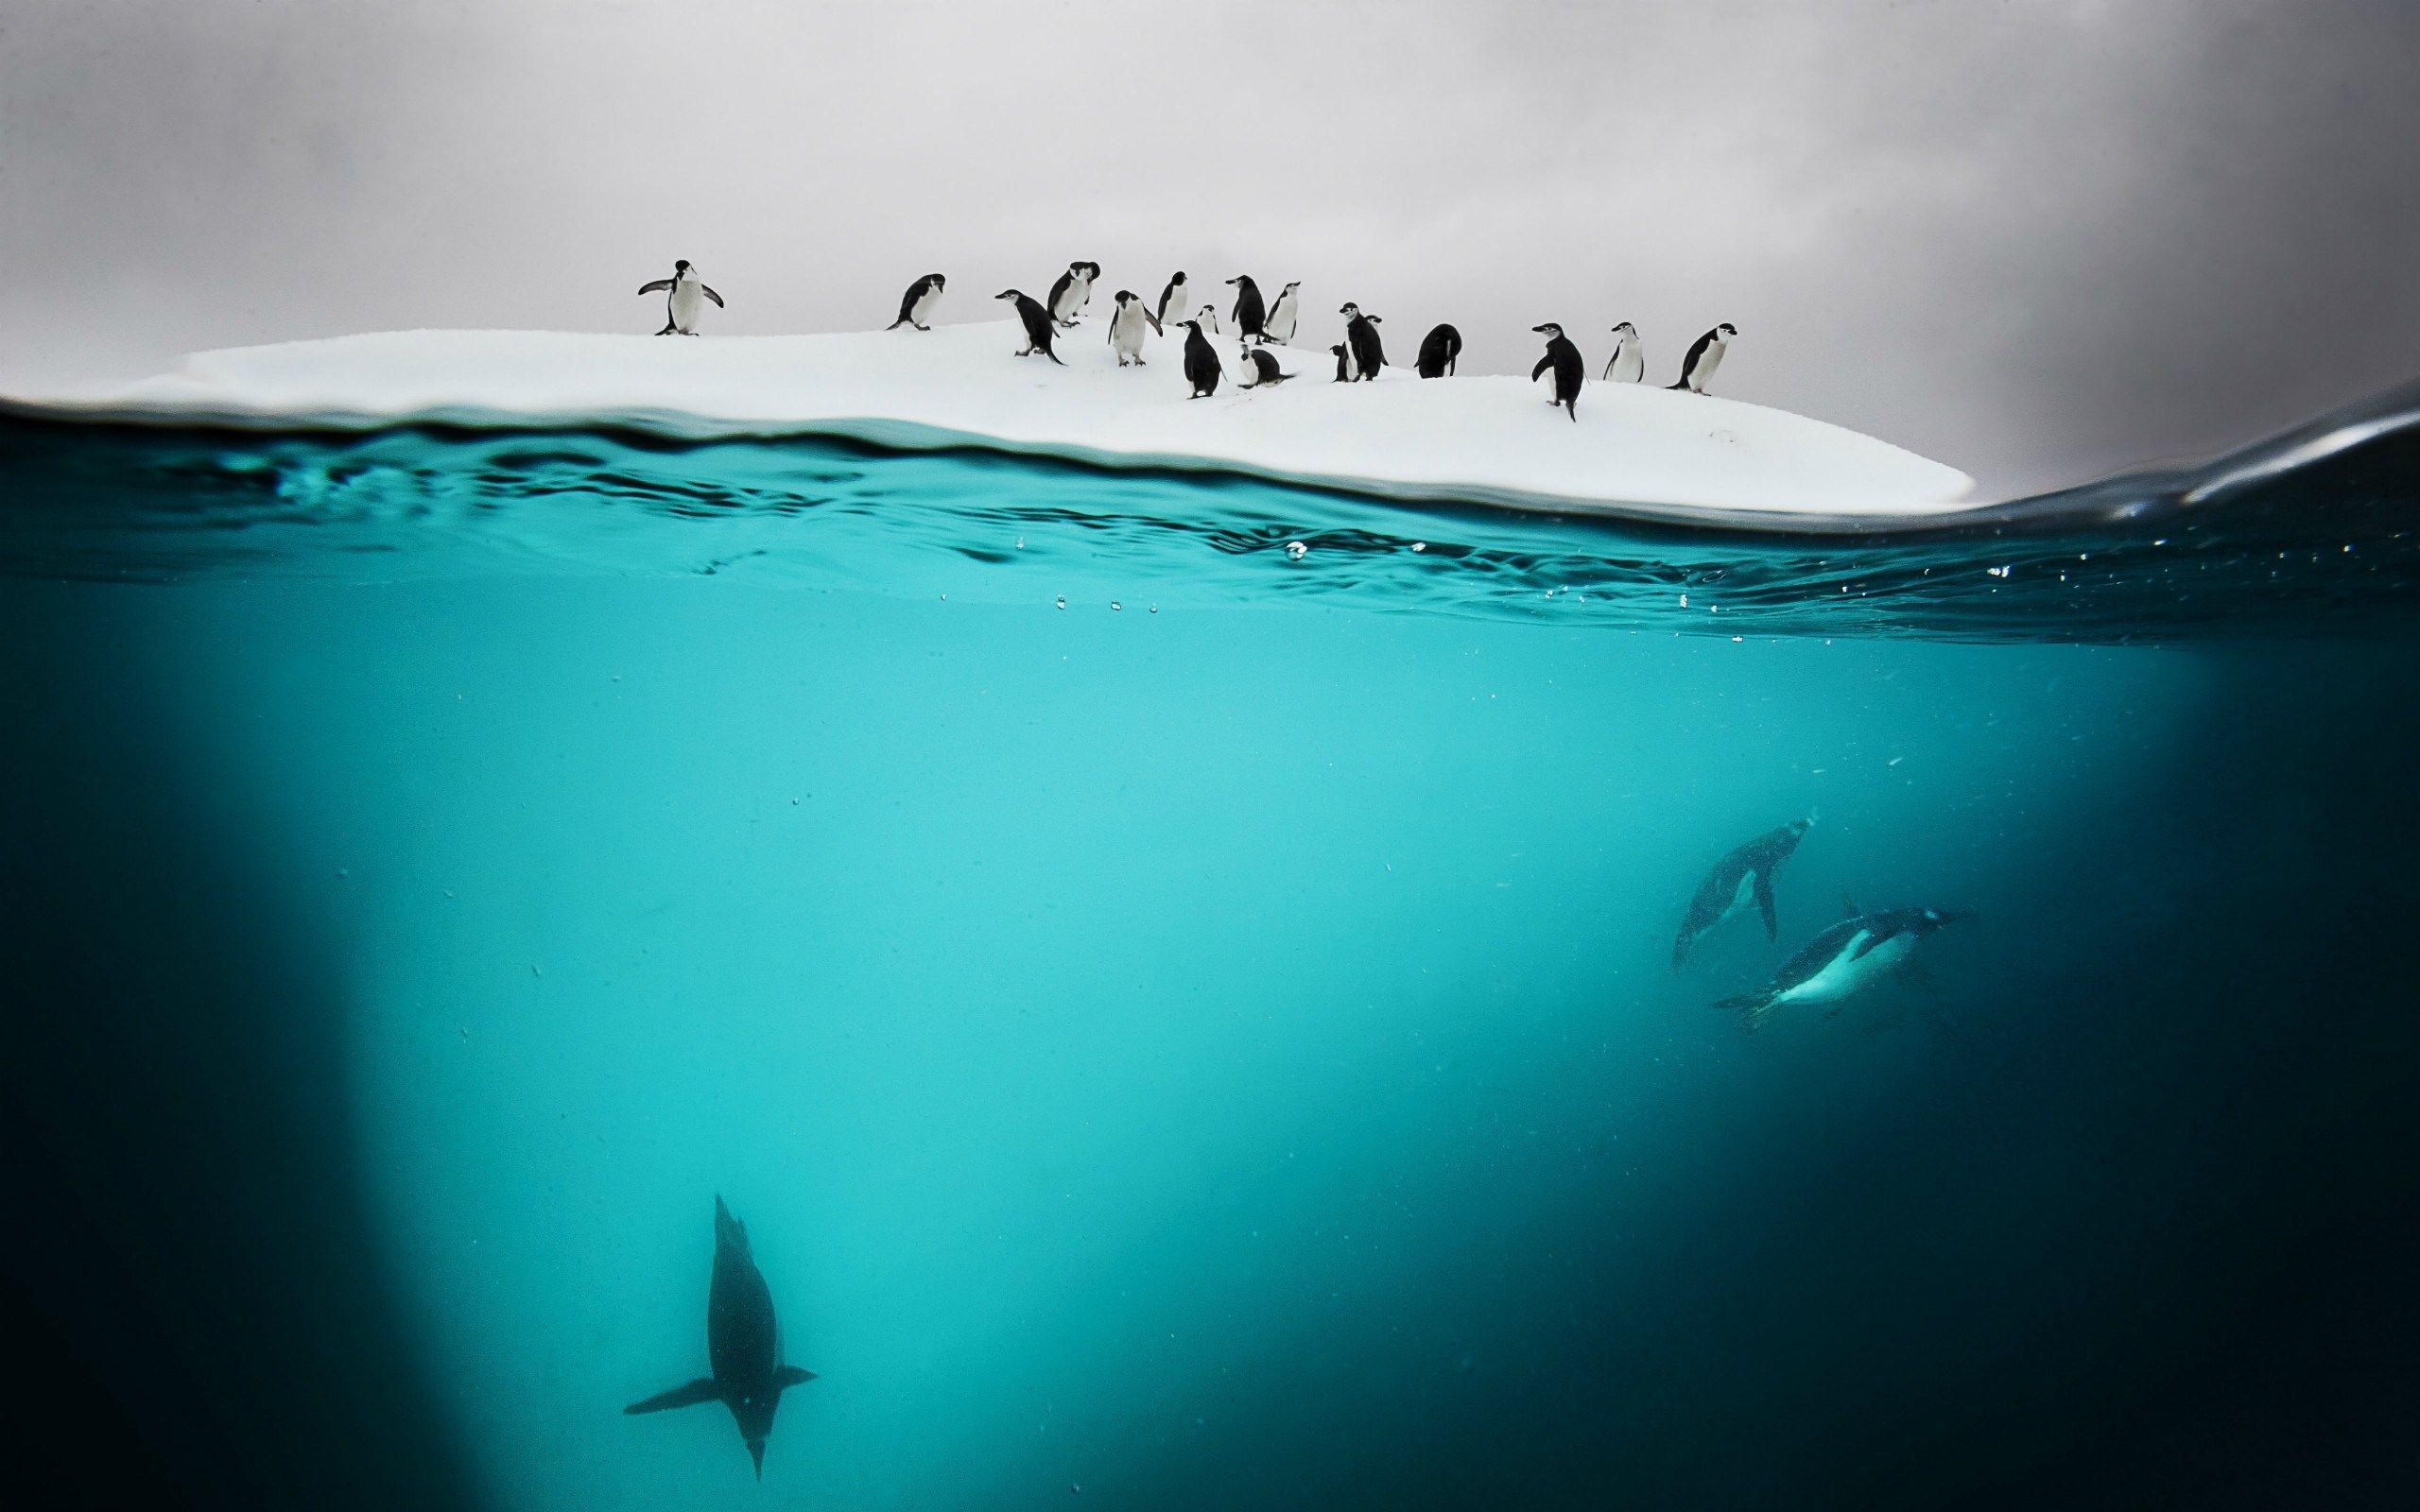 HD wallpaper, Underwater, Antarctic, Photo, Penguins, Swimming